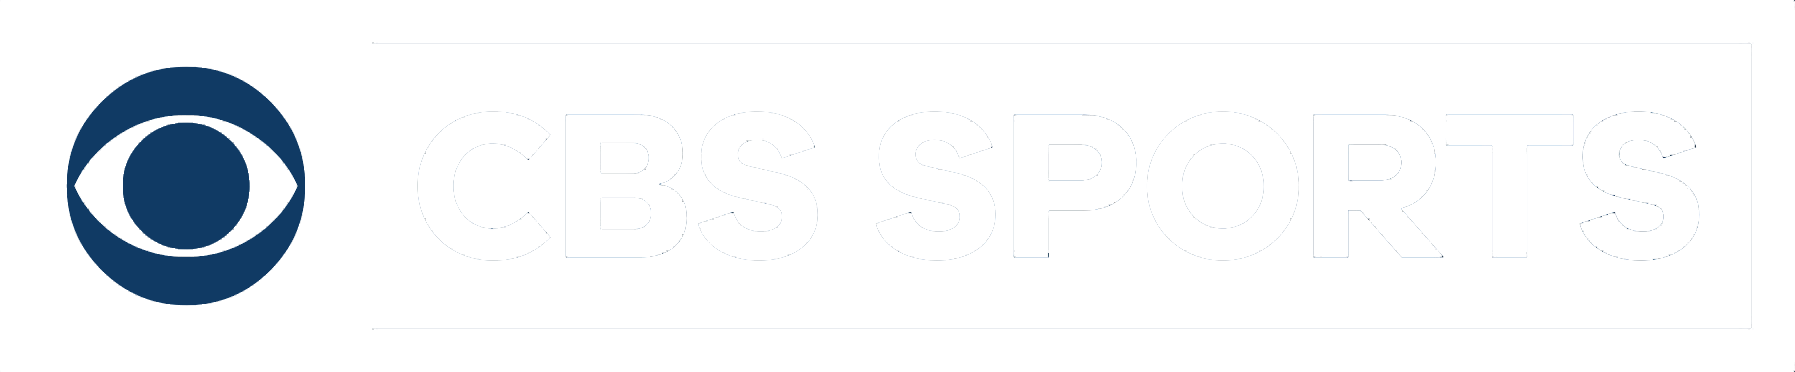 cbs sports logo